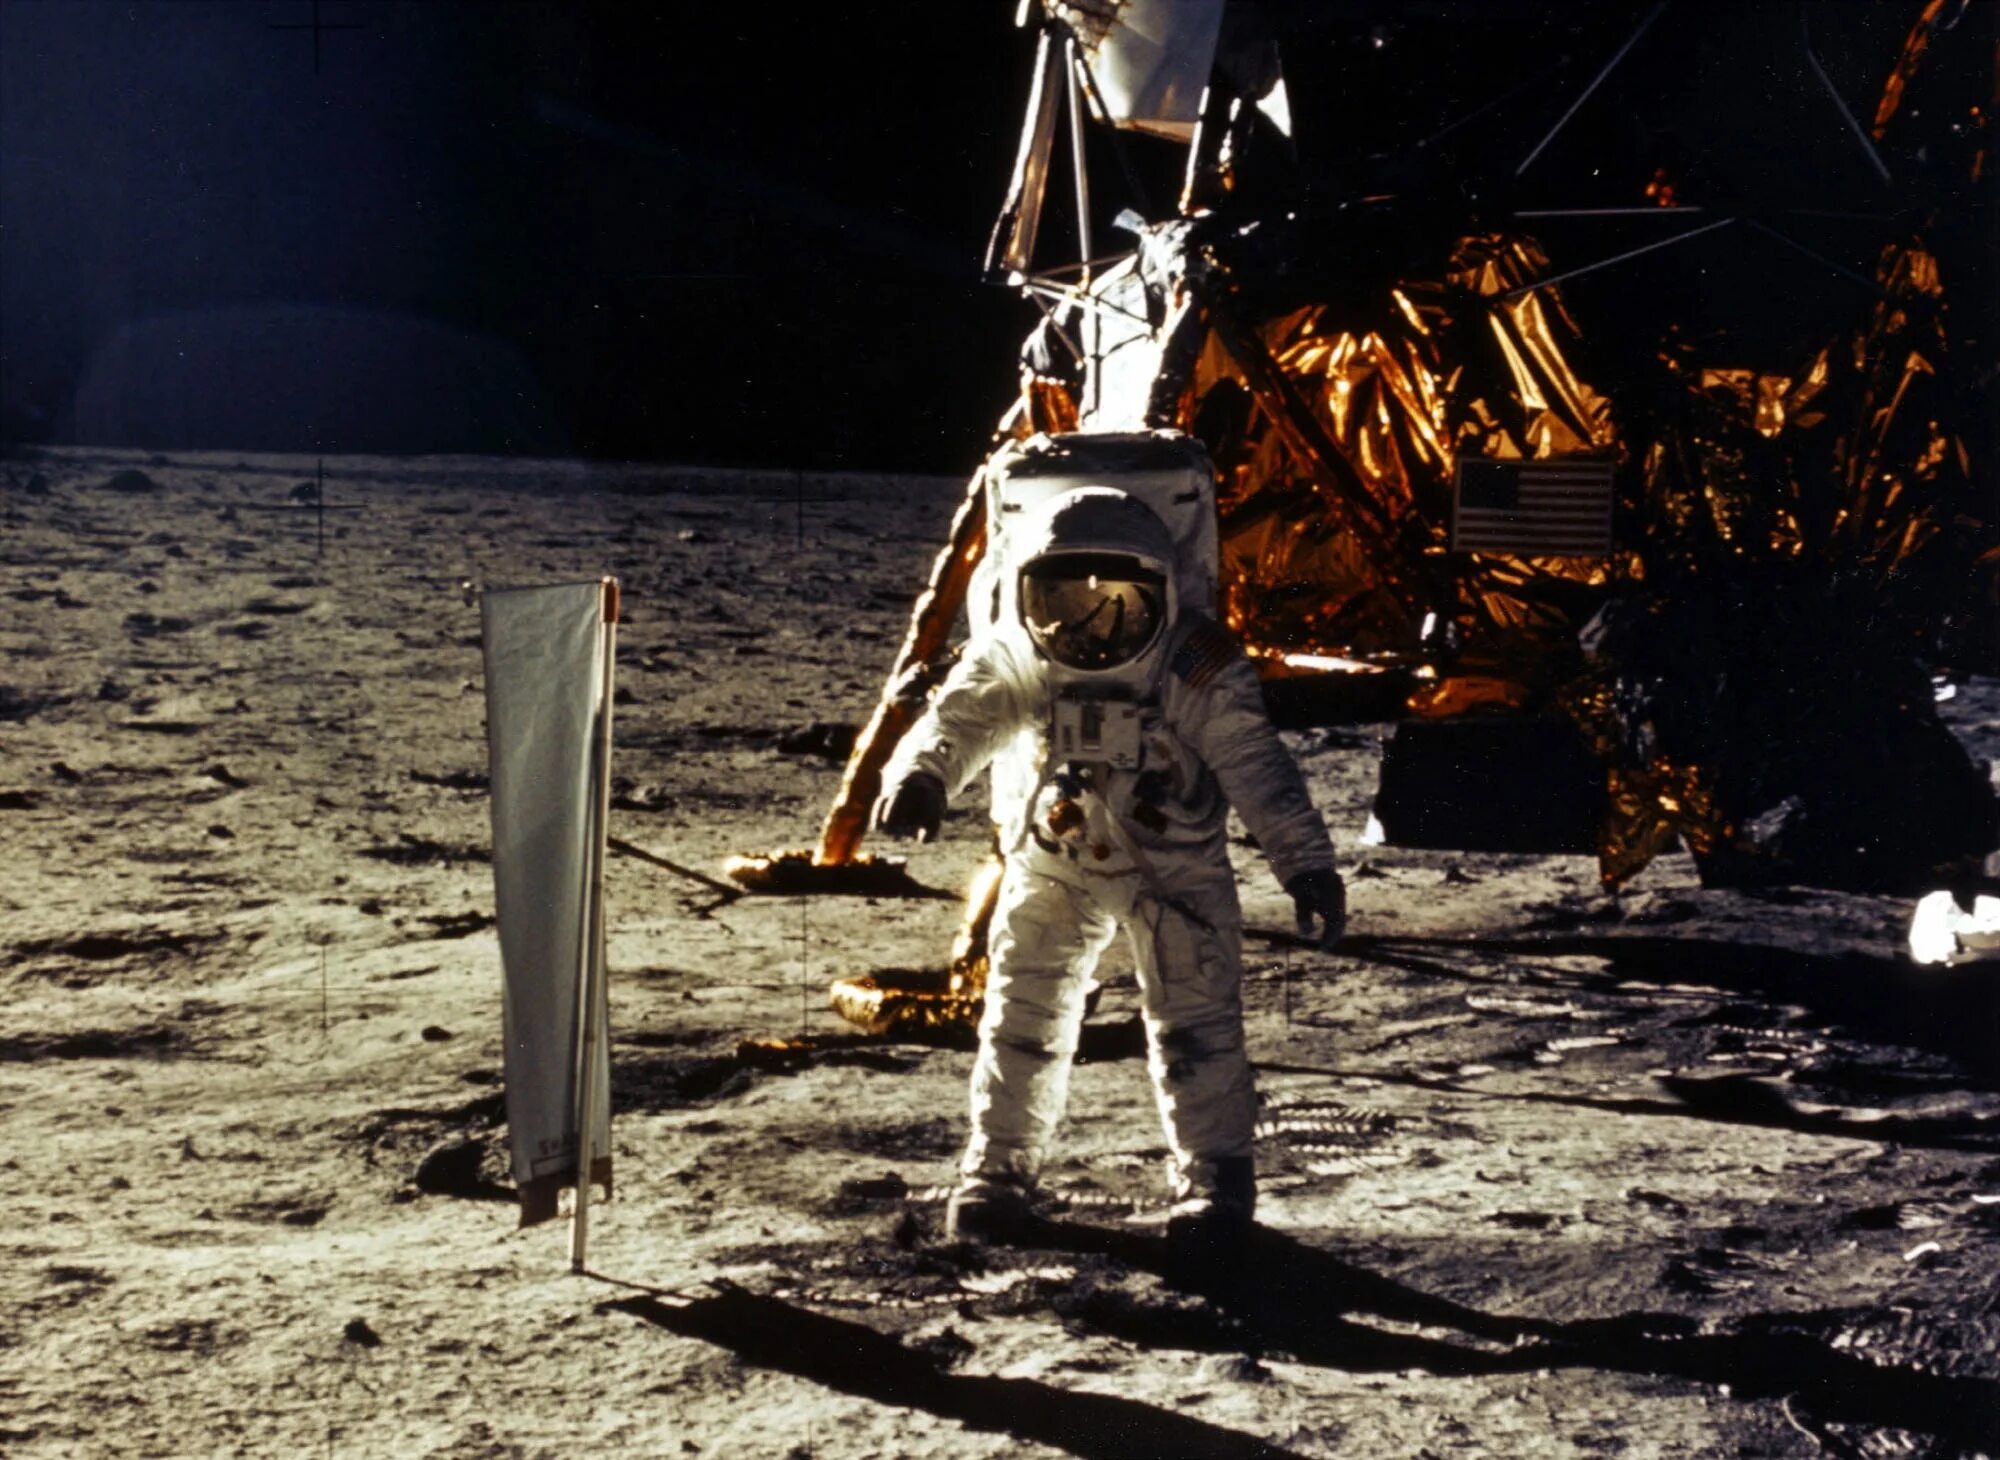 Apollo 11 1969. Man landed on the moon